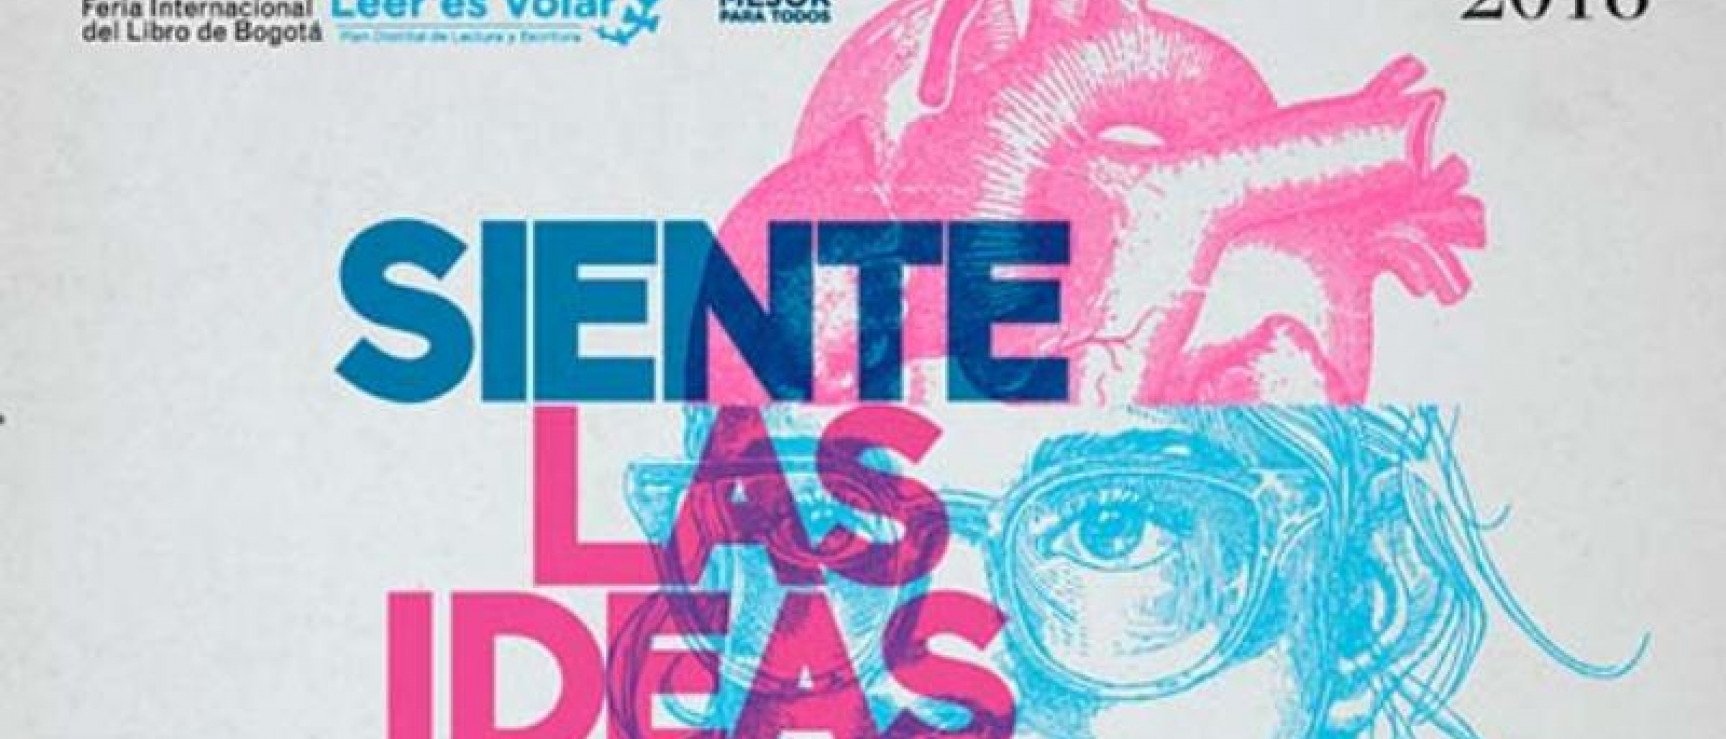 Cartel de la XXXI Feria Internacional de Libro de Bogotá (FILBo 2018)